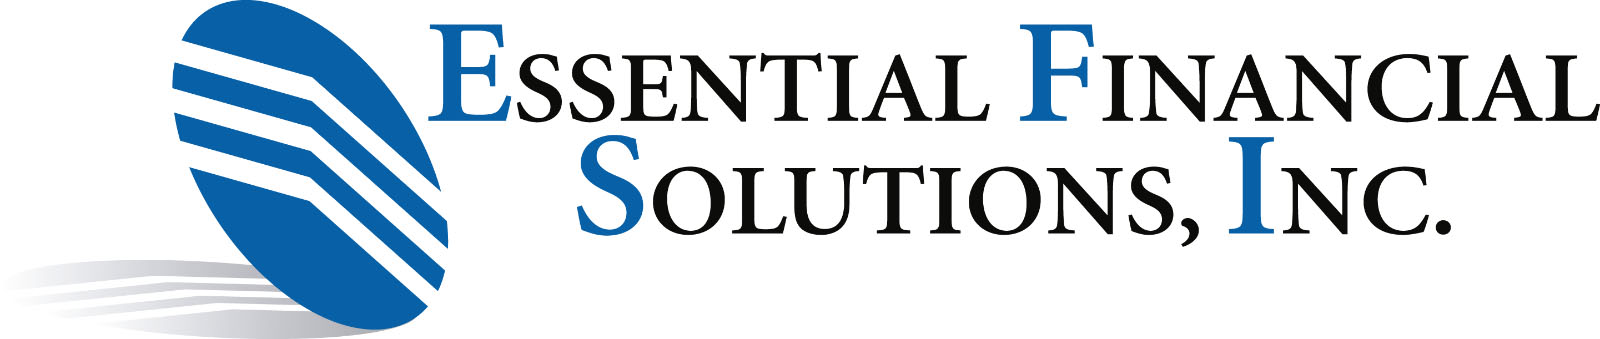 Enterprise Financial Solutions, Inc. logo